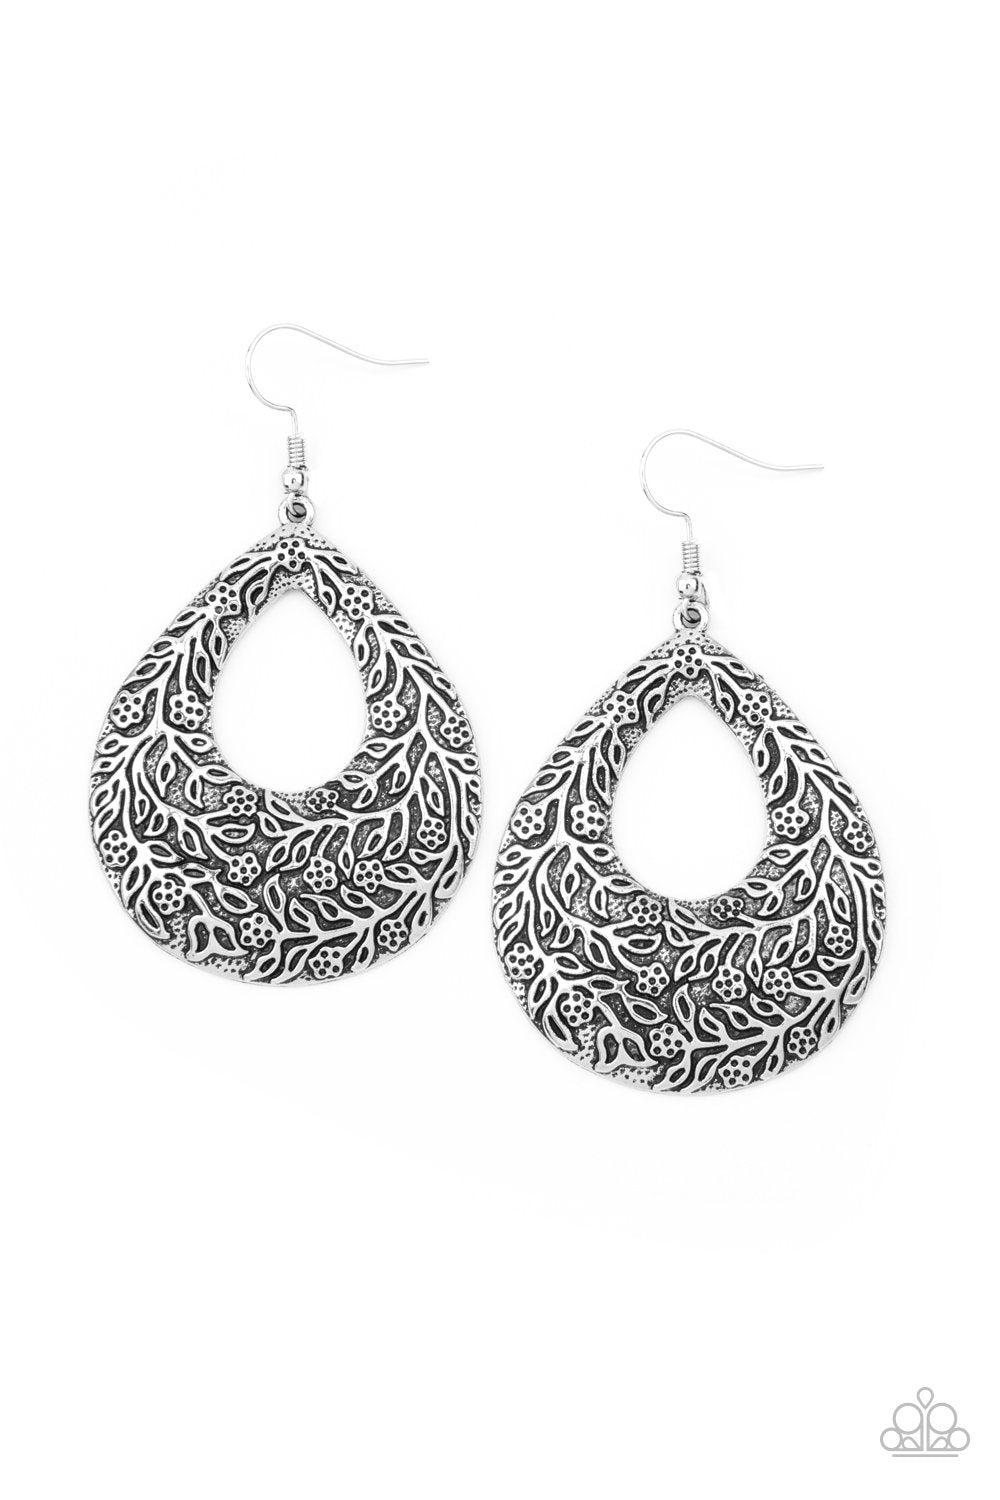 Flirtatiously Flourishing Silver Teardrop Earrings - Paparazzi Accessories- lightbox - CarasShop.com - $5 Jewelry by Cara Jewels